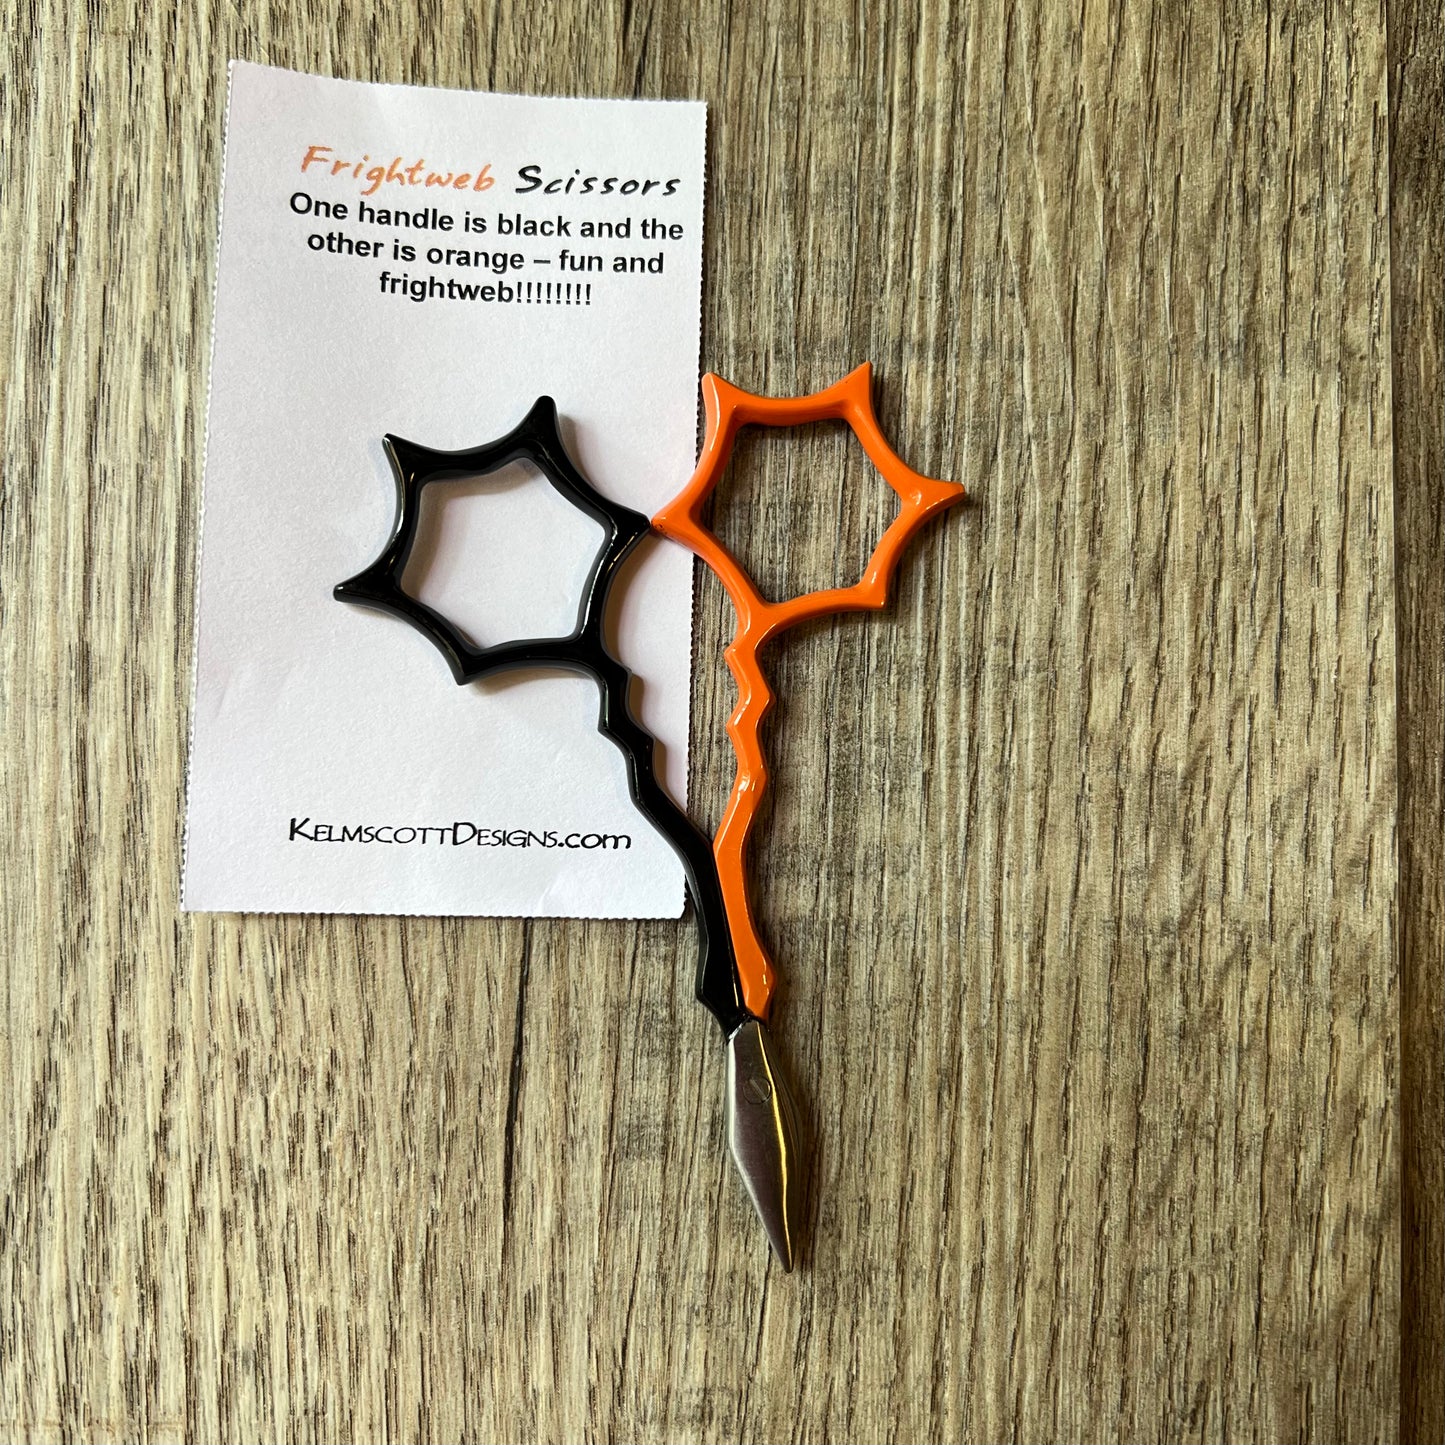 Frightweb Scissors